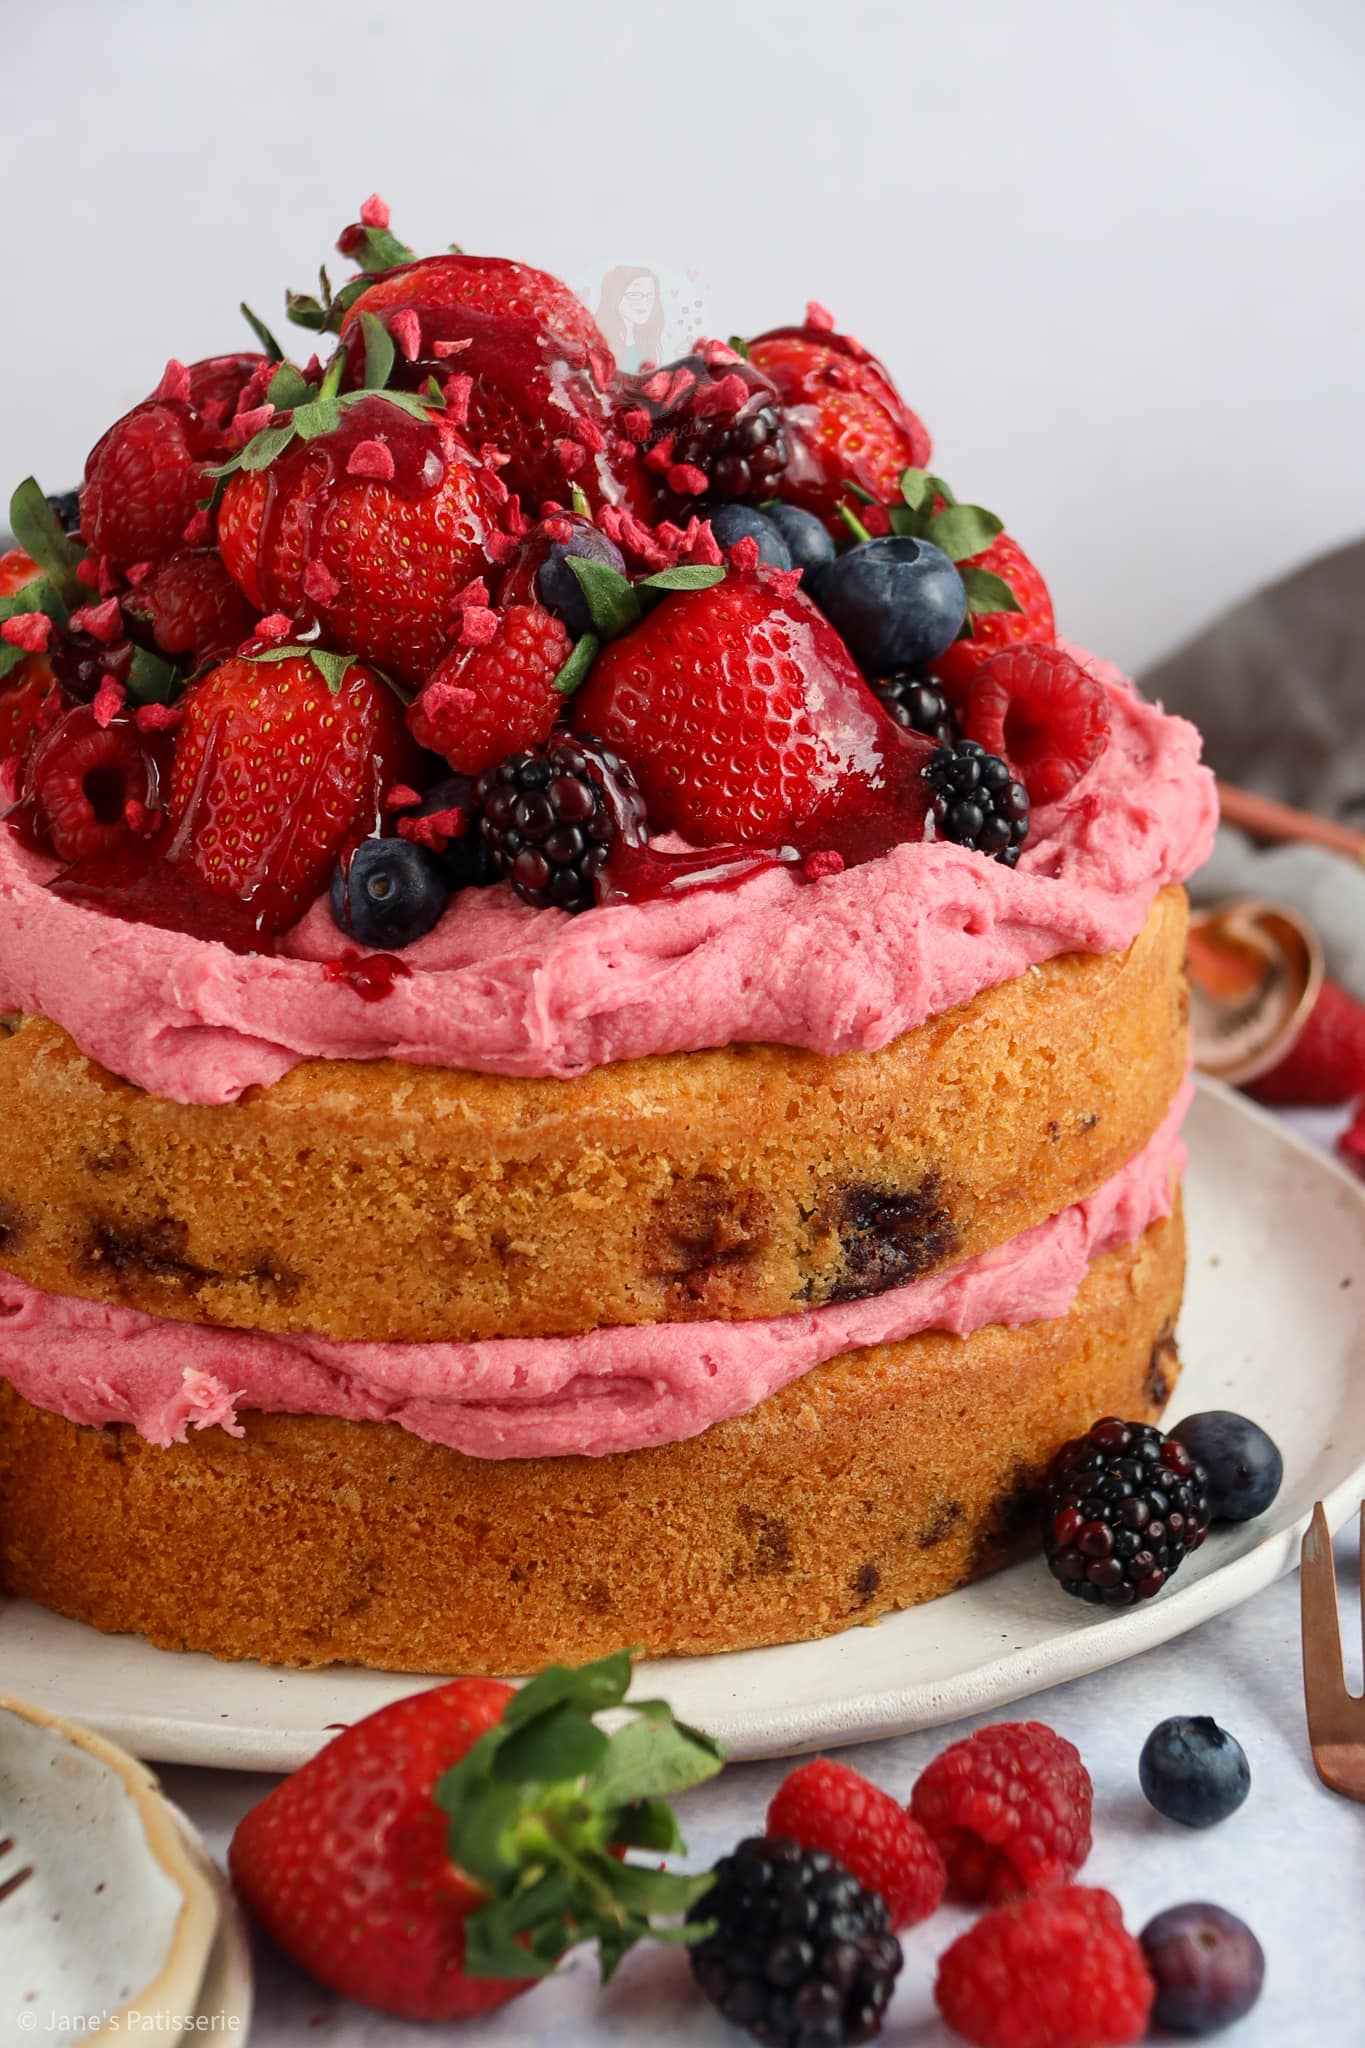 Lemon Blueberry Cake - Preppy Kitchen